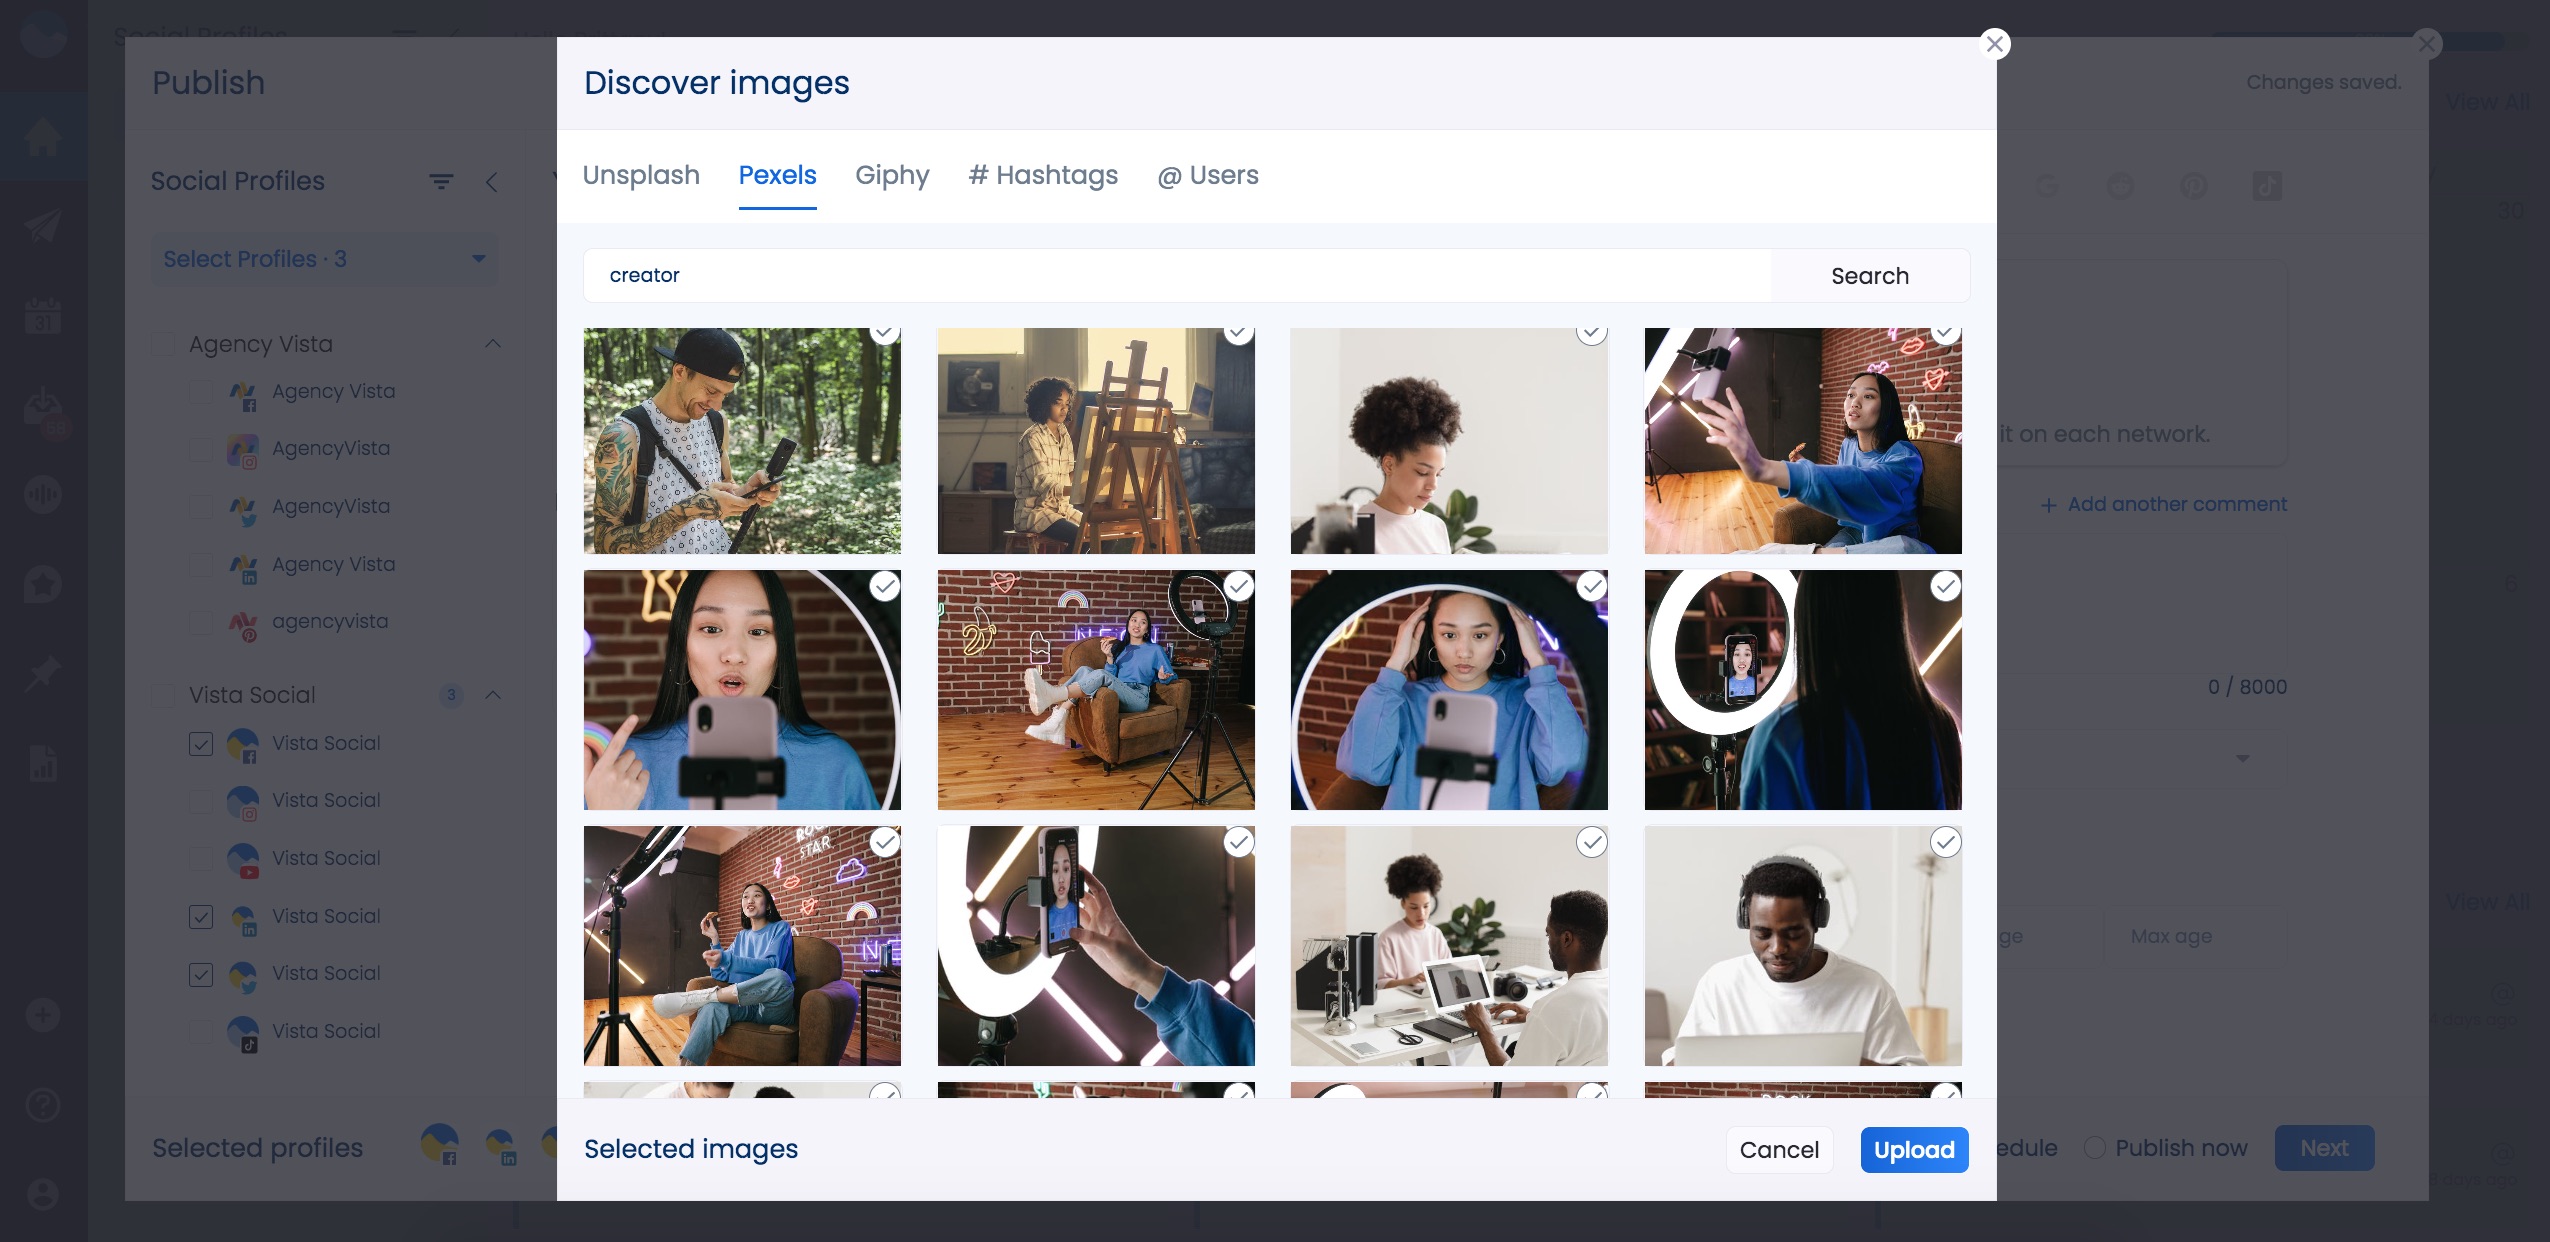 Find Digital Marketing HD Images with Pexels in Vista Social